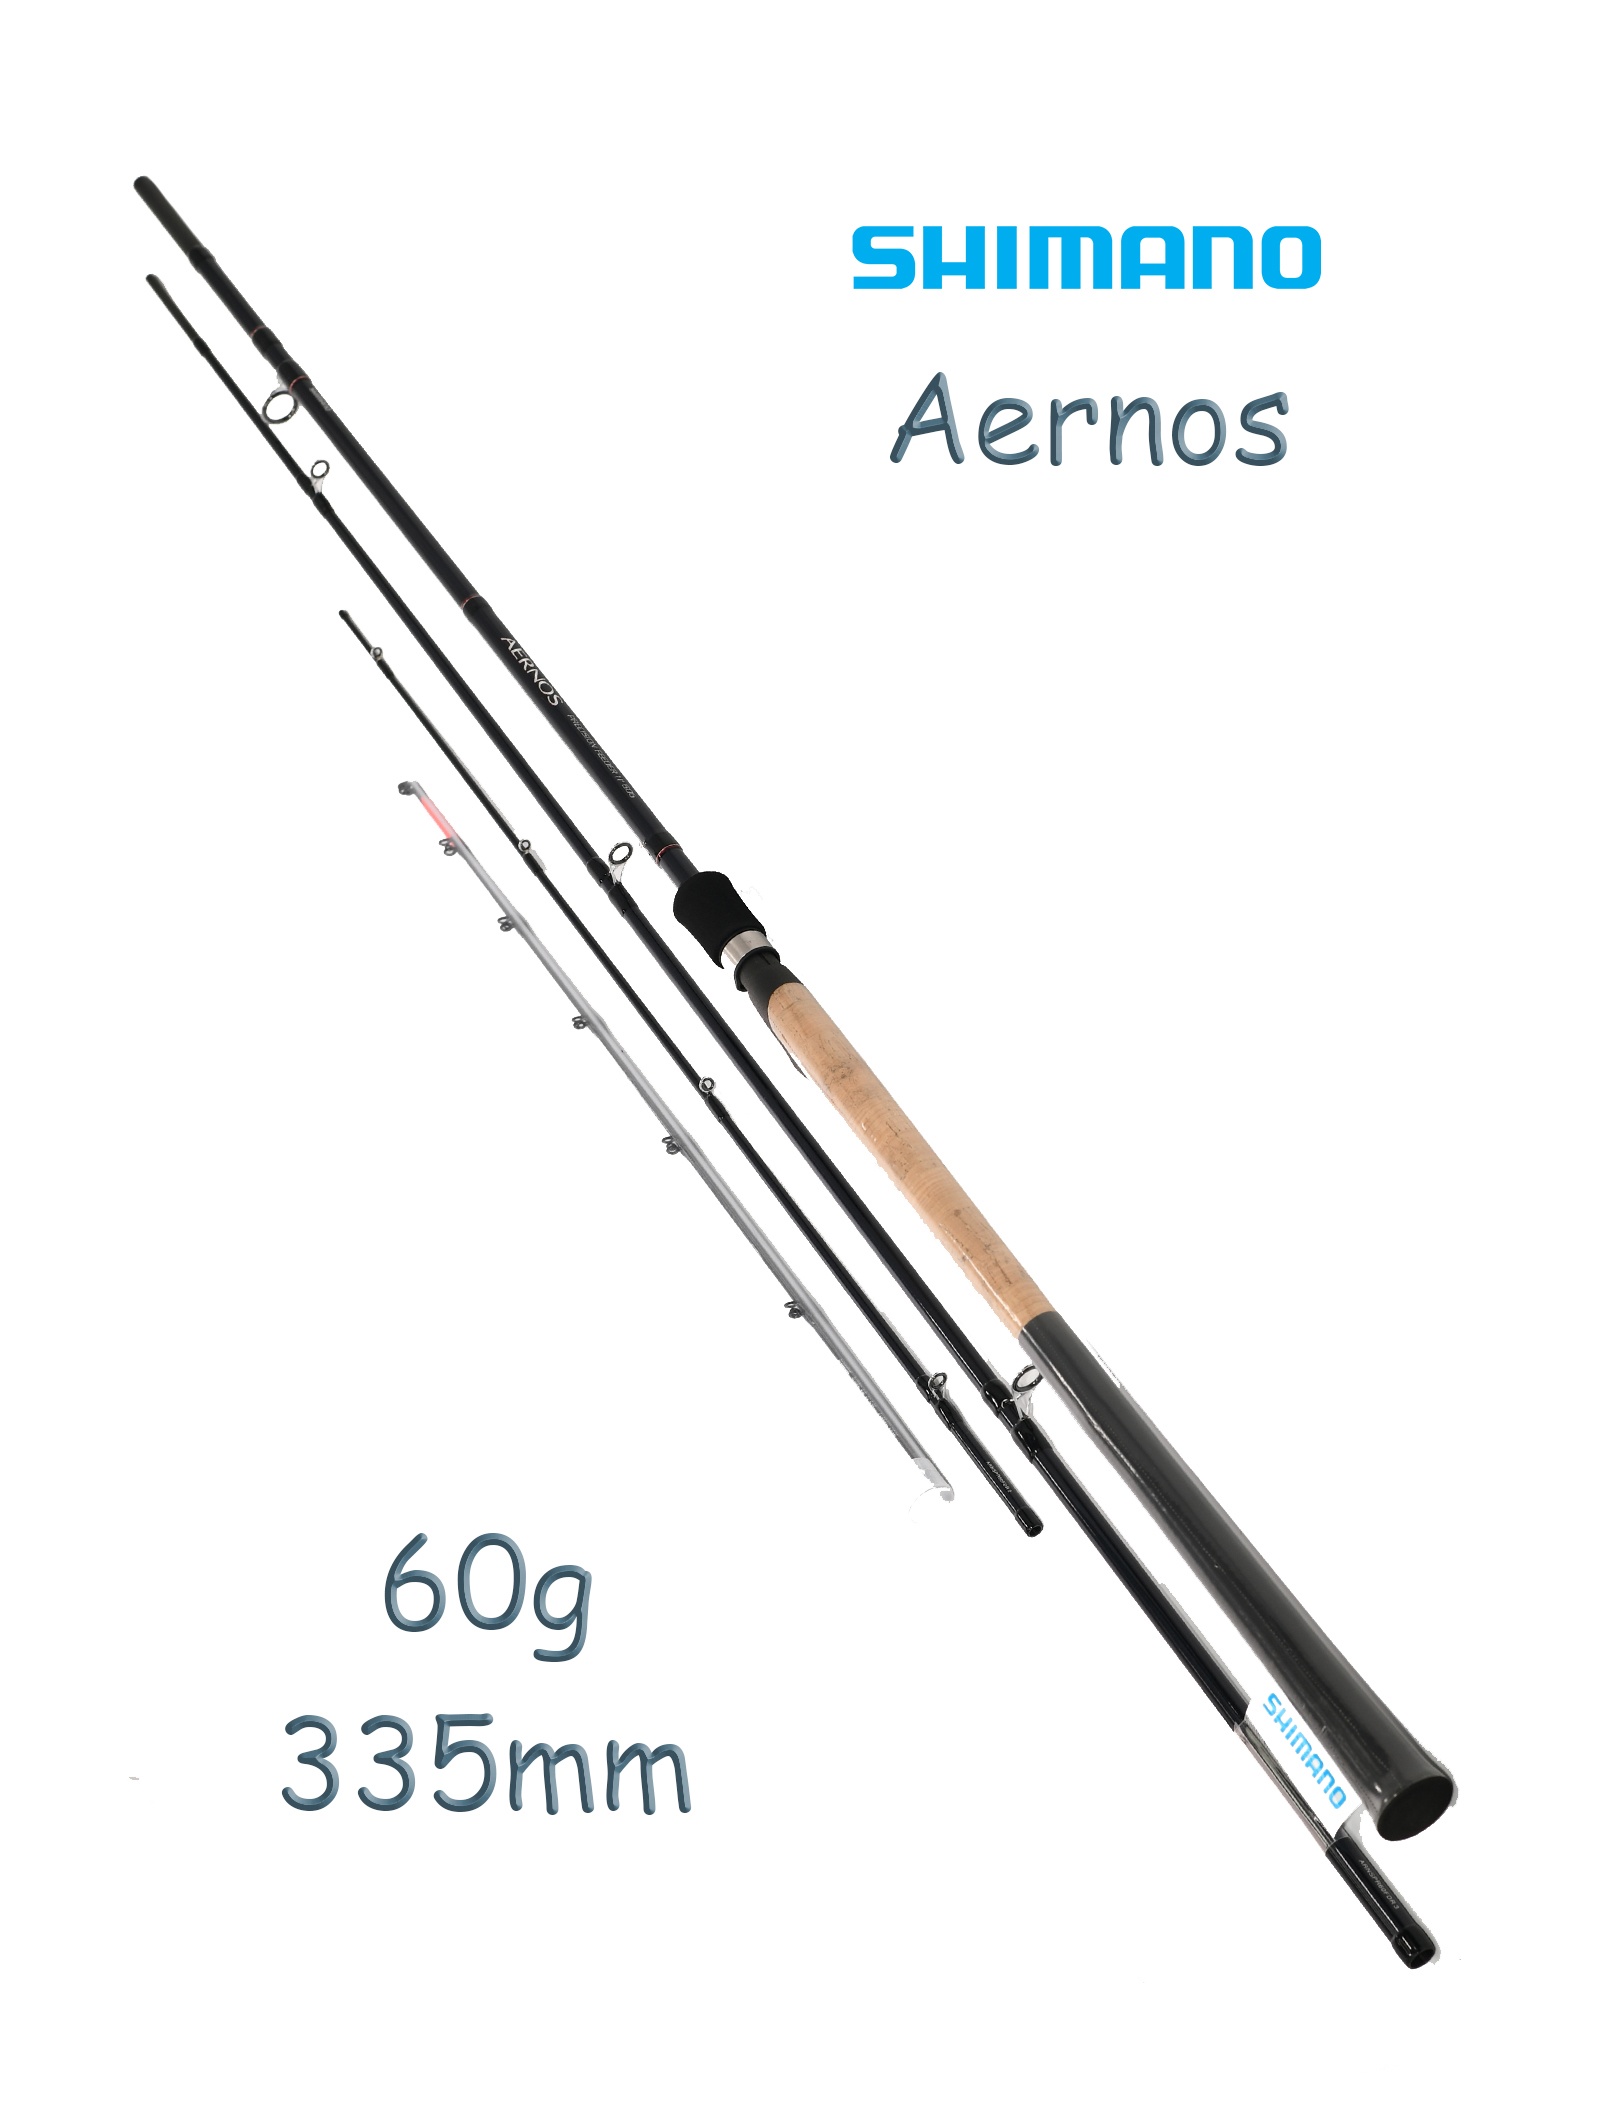 Shimano Aernos 335-60G